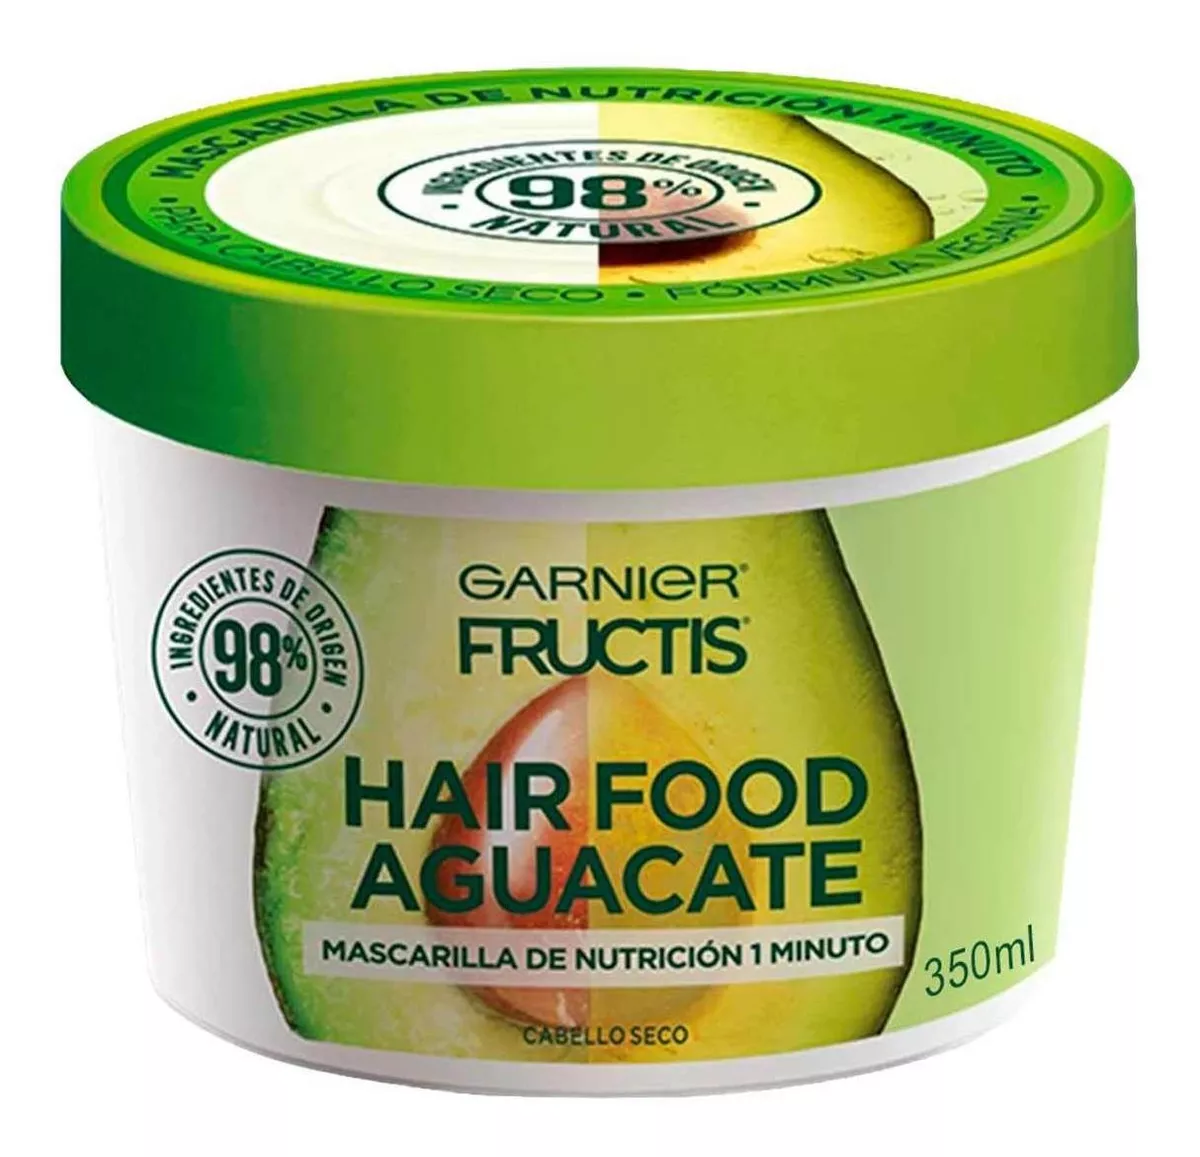 Mascarilla Capilar Garnier Fructis Hair Food Aguacate 350ml